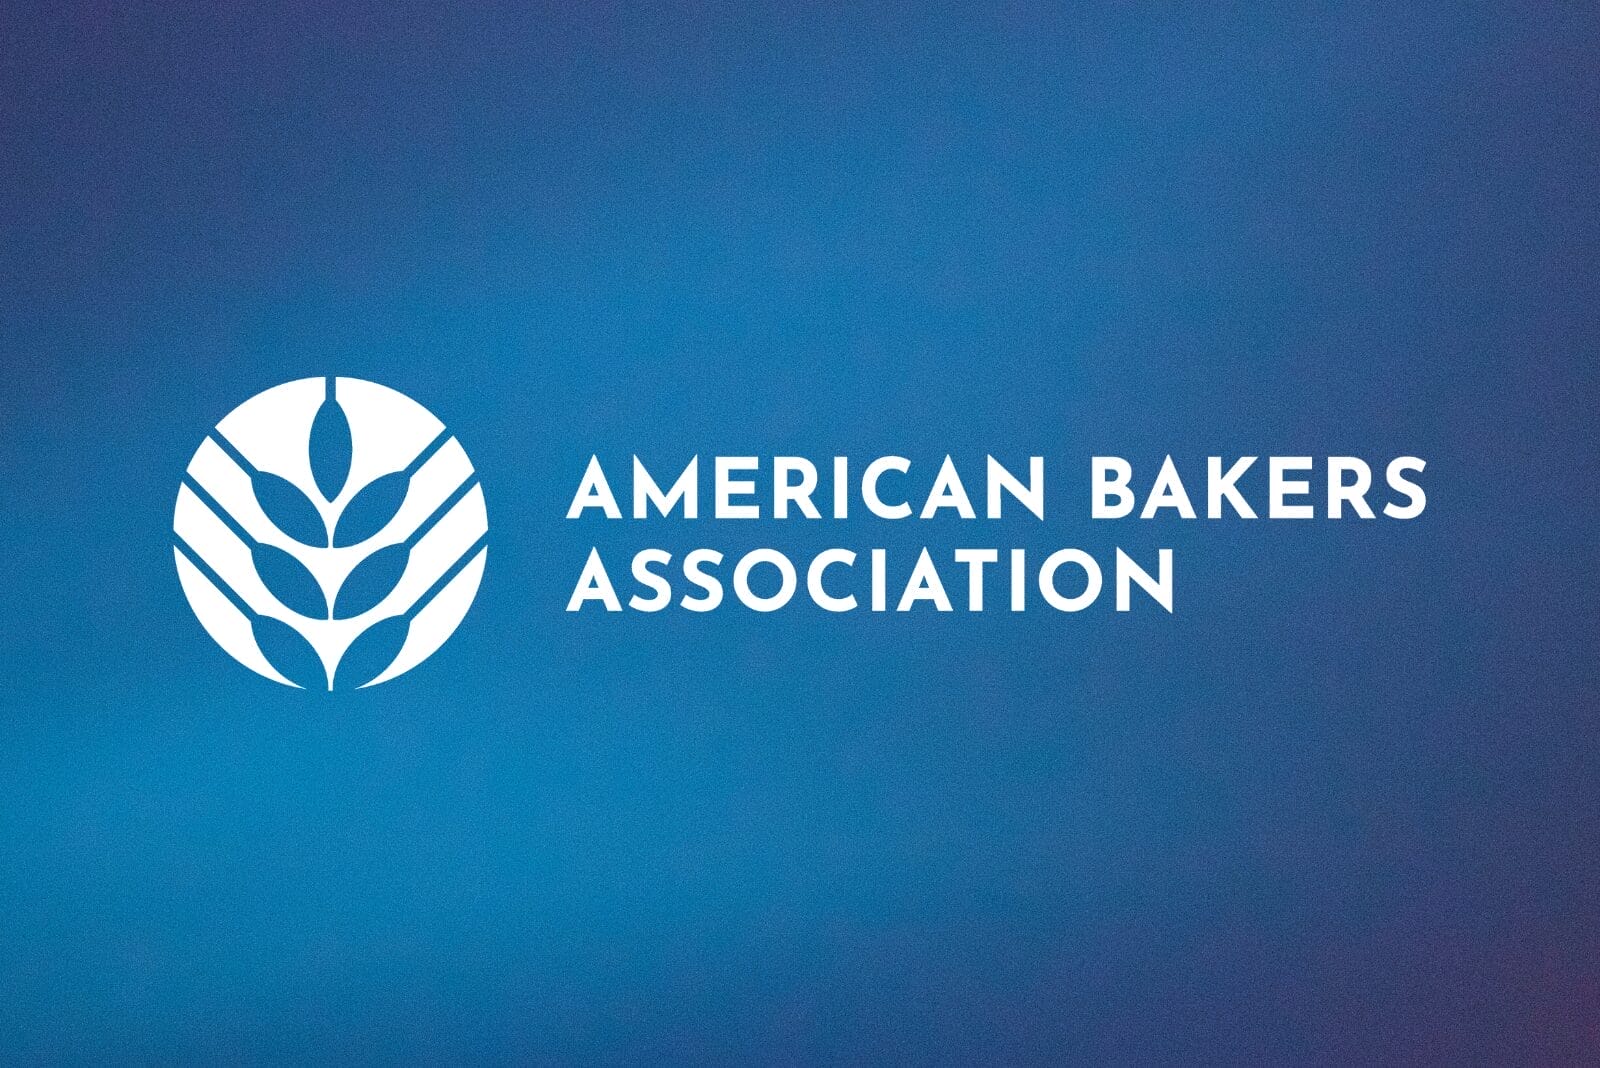 American Bakers Association logo